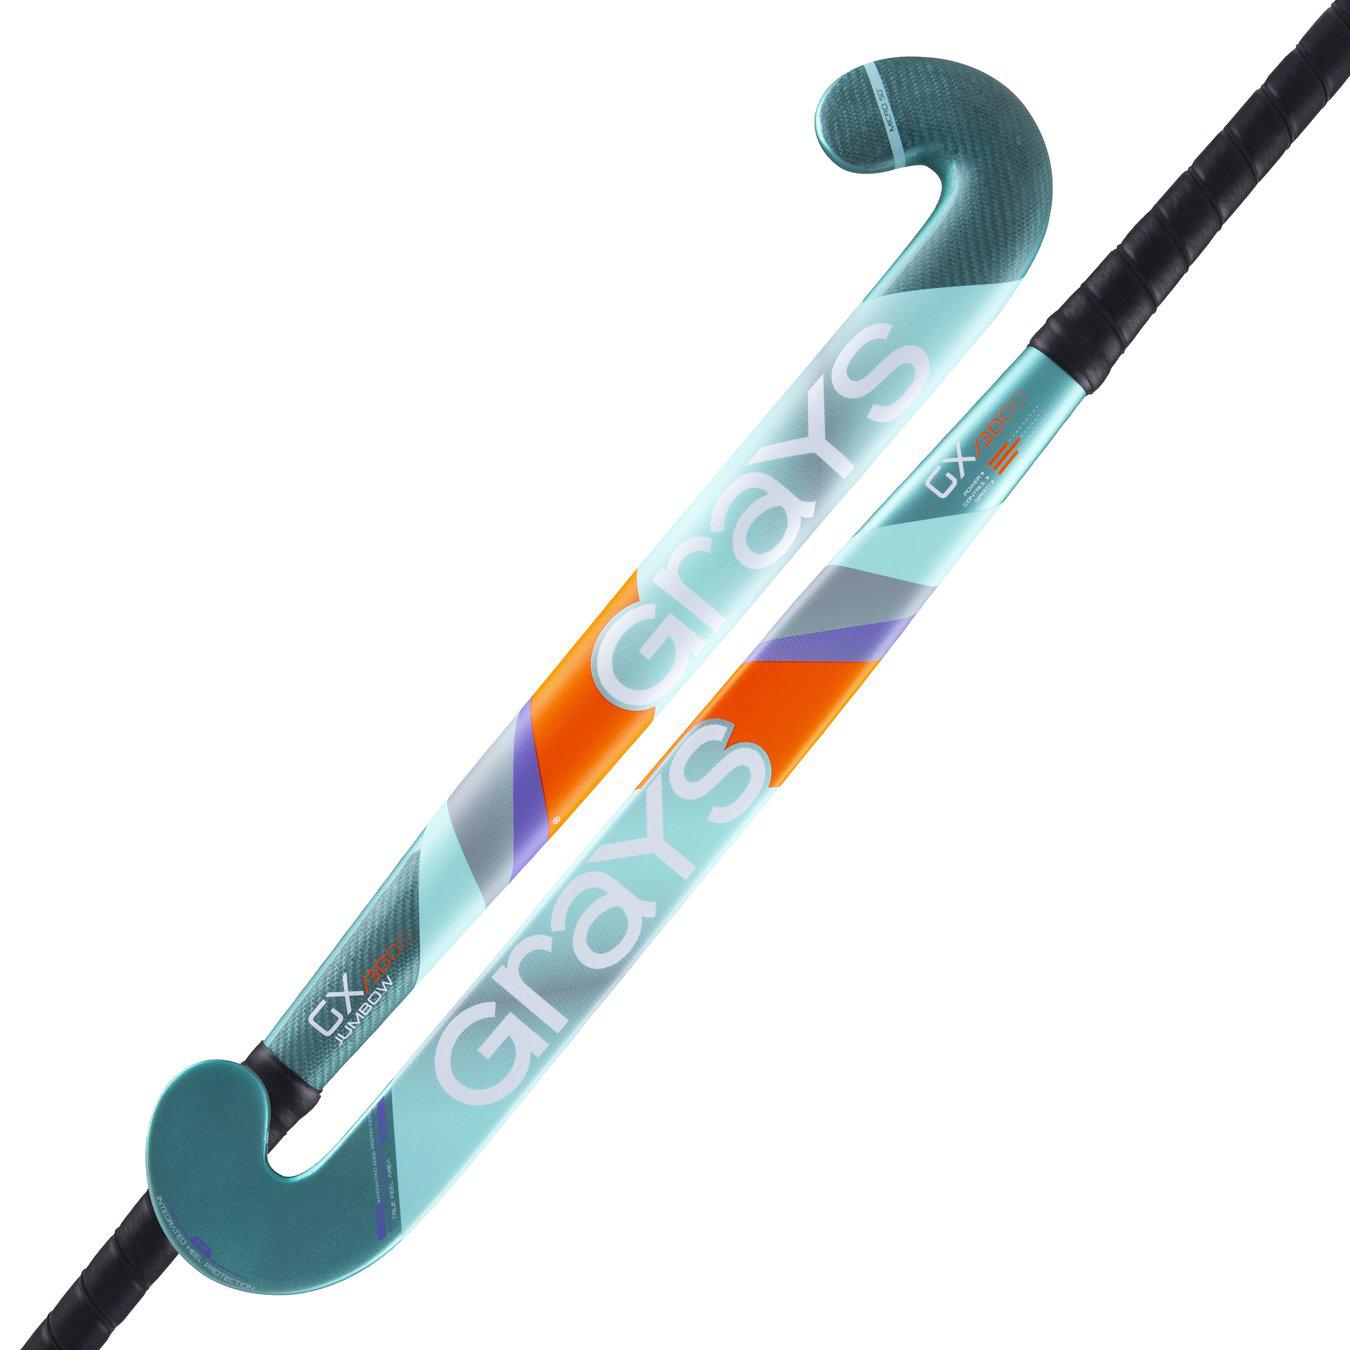 Grays GX3000 Ultrabow Composite Hockey Stick-Bruntsfield Sports Online